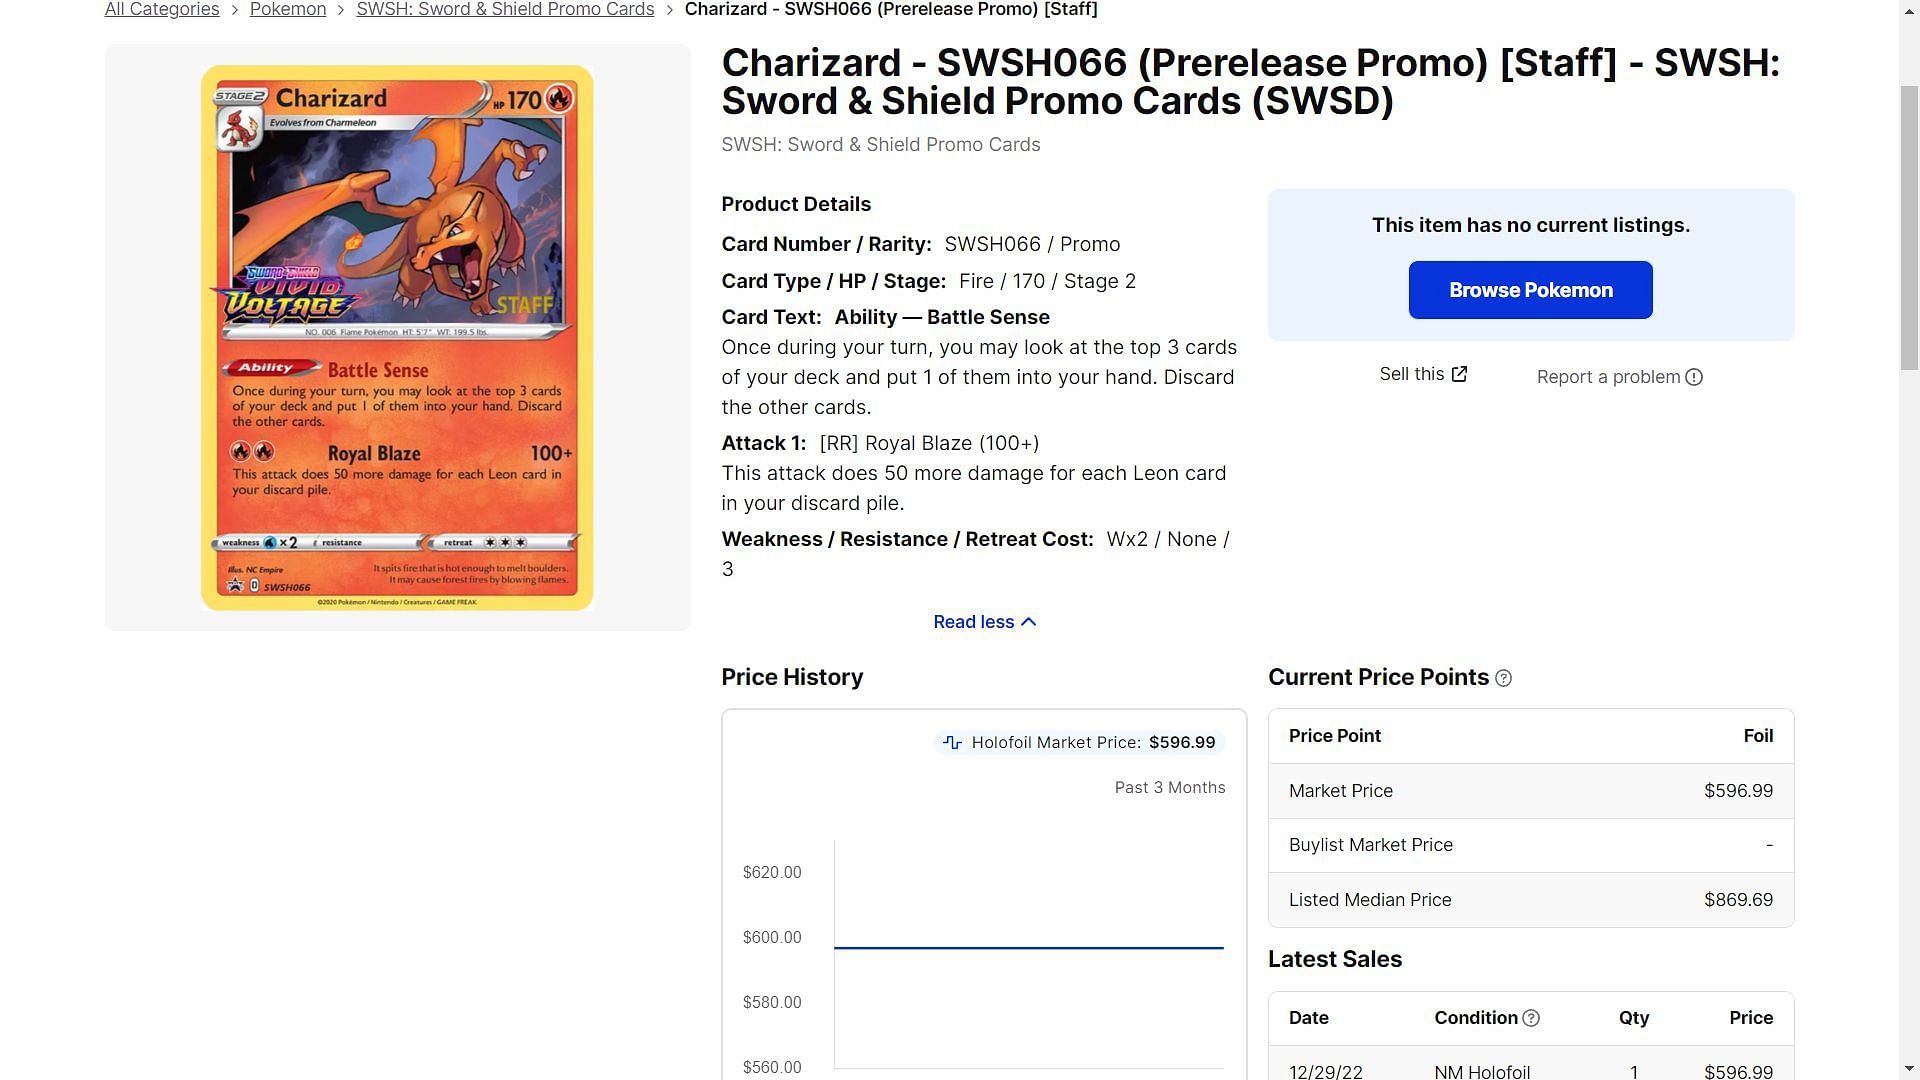 Charizard - SWSH066 (Prerelease Promo) [Staff] - SWSH: Sword &amp; Shield Promo Cards (SWSD) (Image via tcgplayer.com)